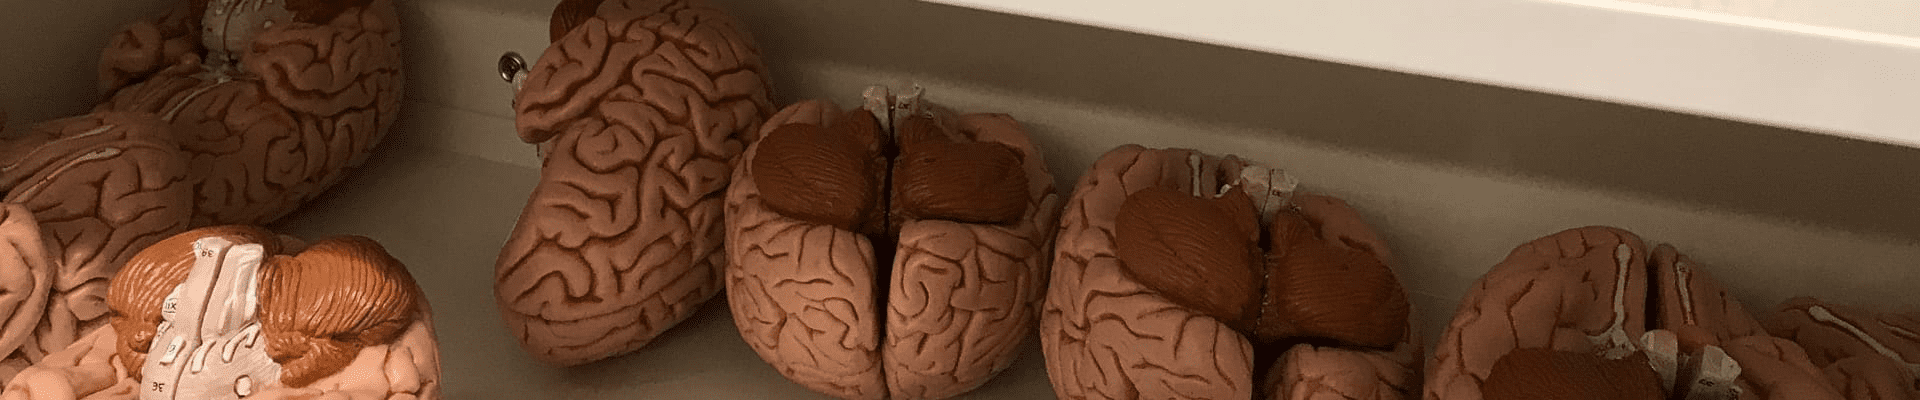 models of brains